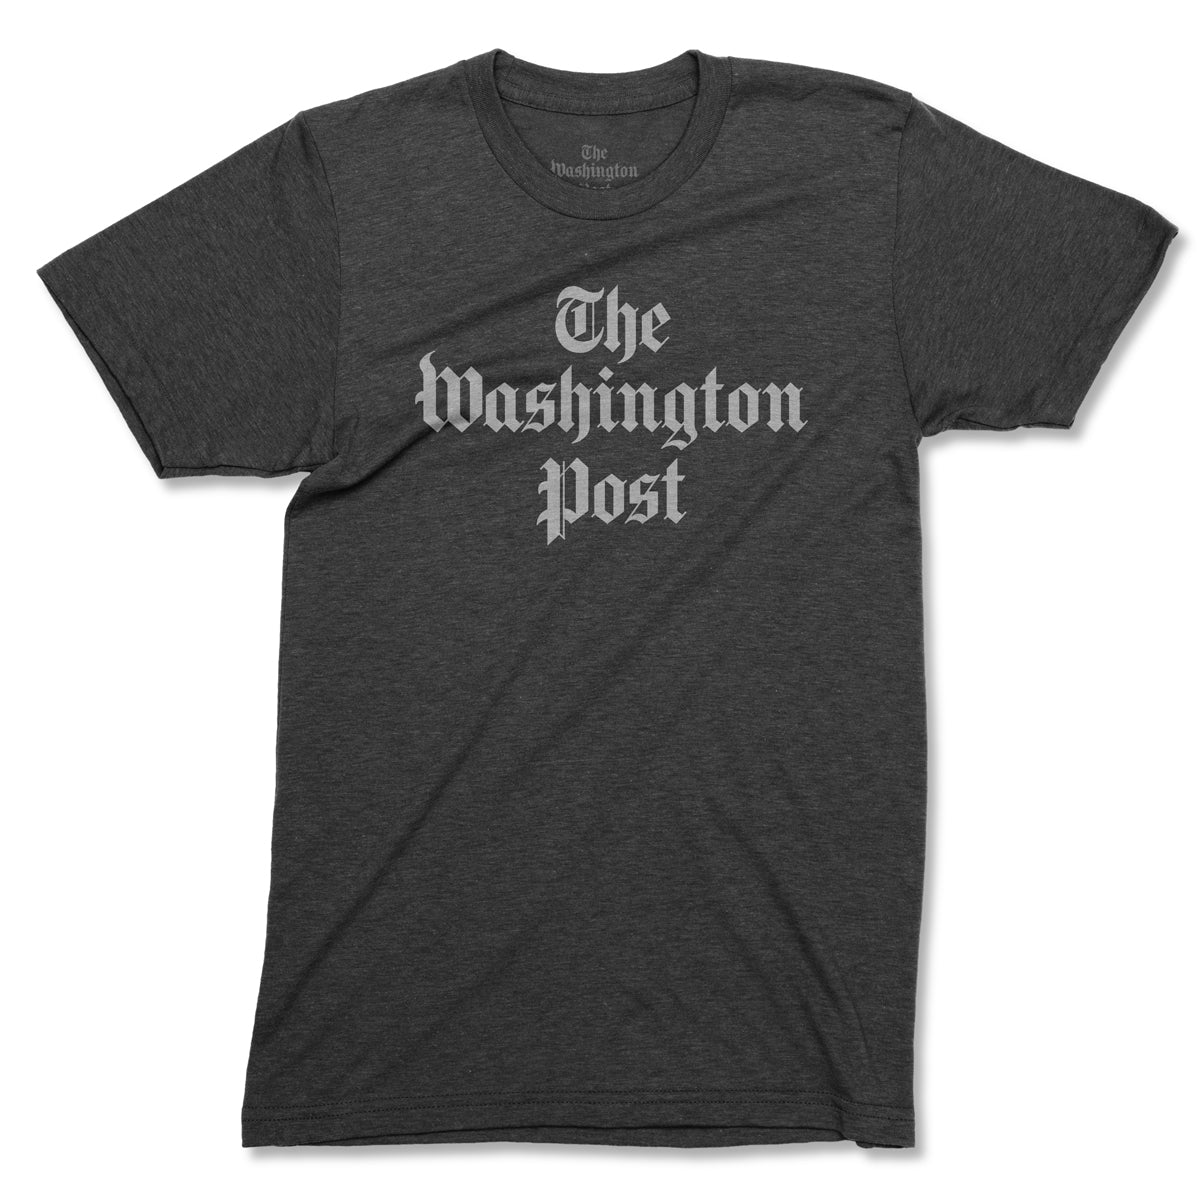 The Washington Post Logo T-shirt in dark grey with charcoal grey writing, short sleeved 